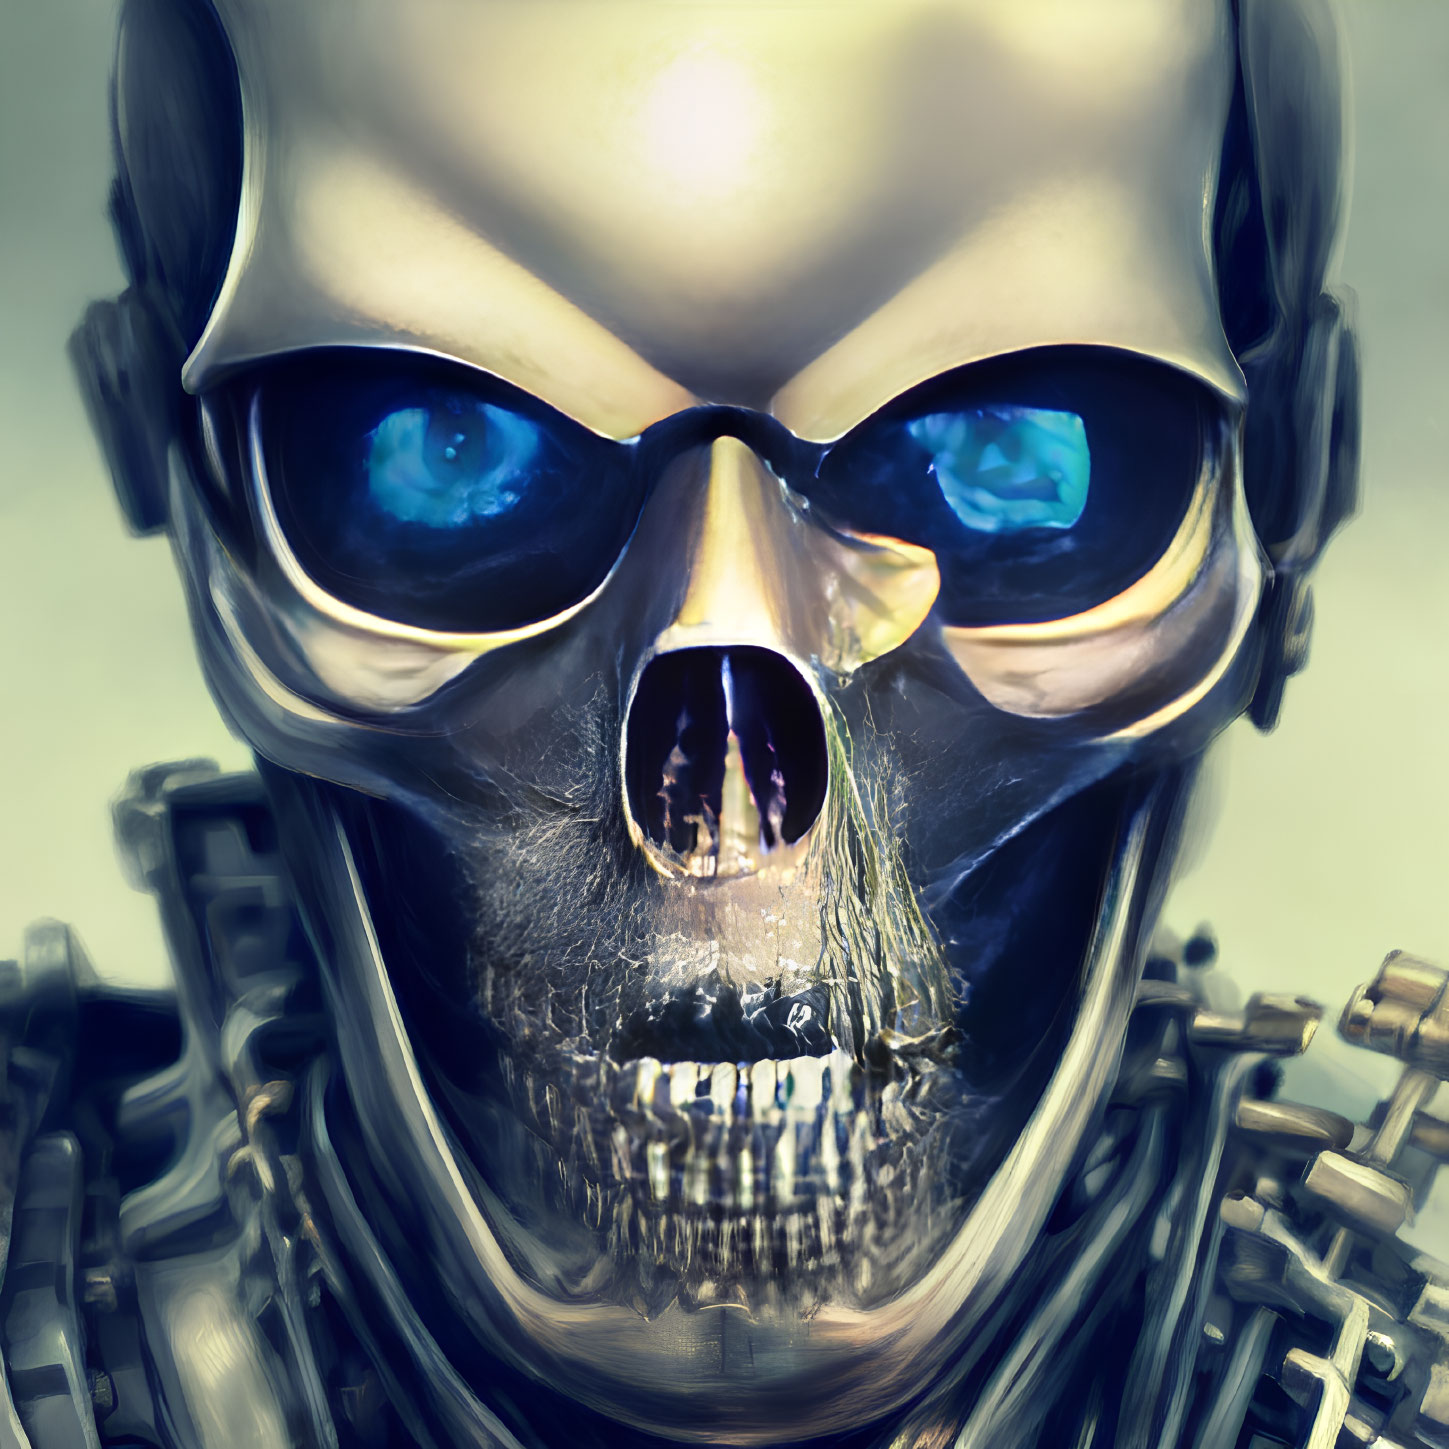 Detailed illustration of futuristic robotic skull with intense blue eyes and metallic bones